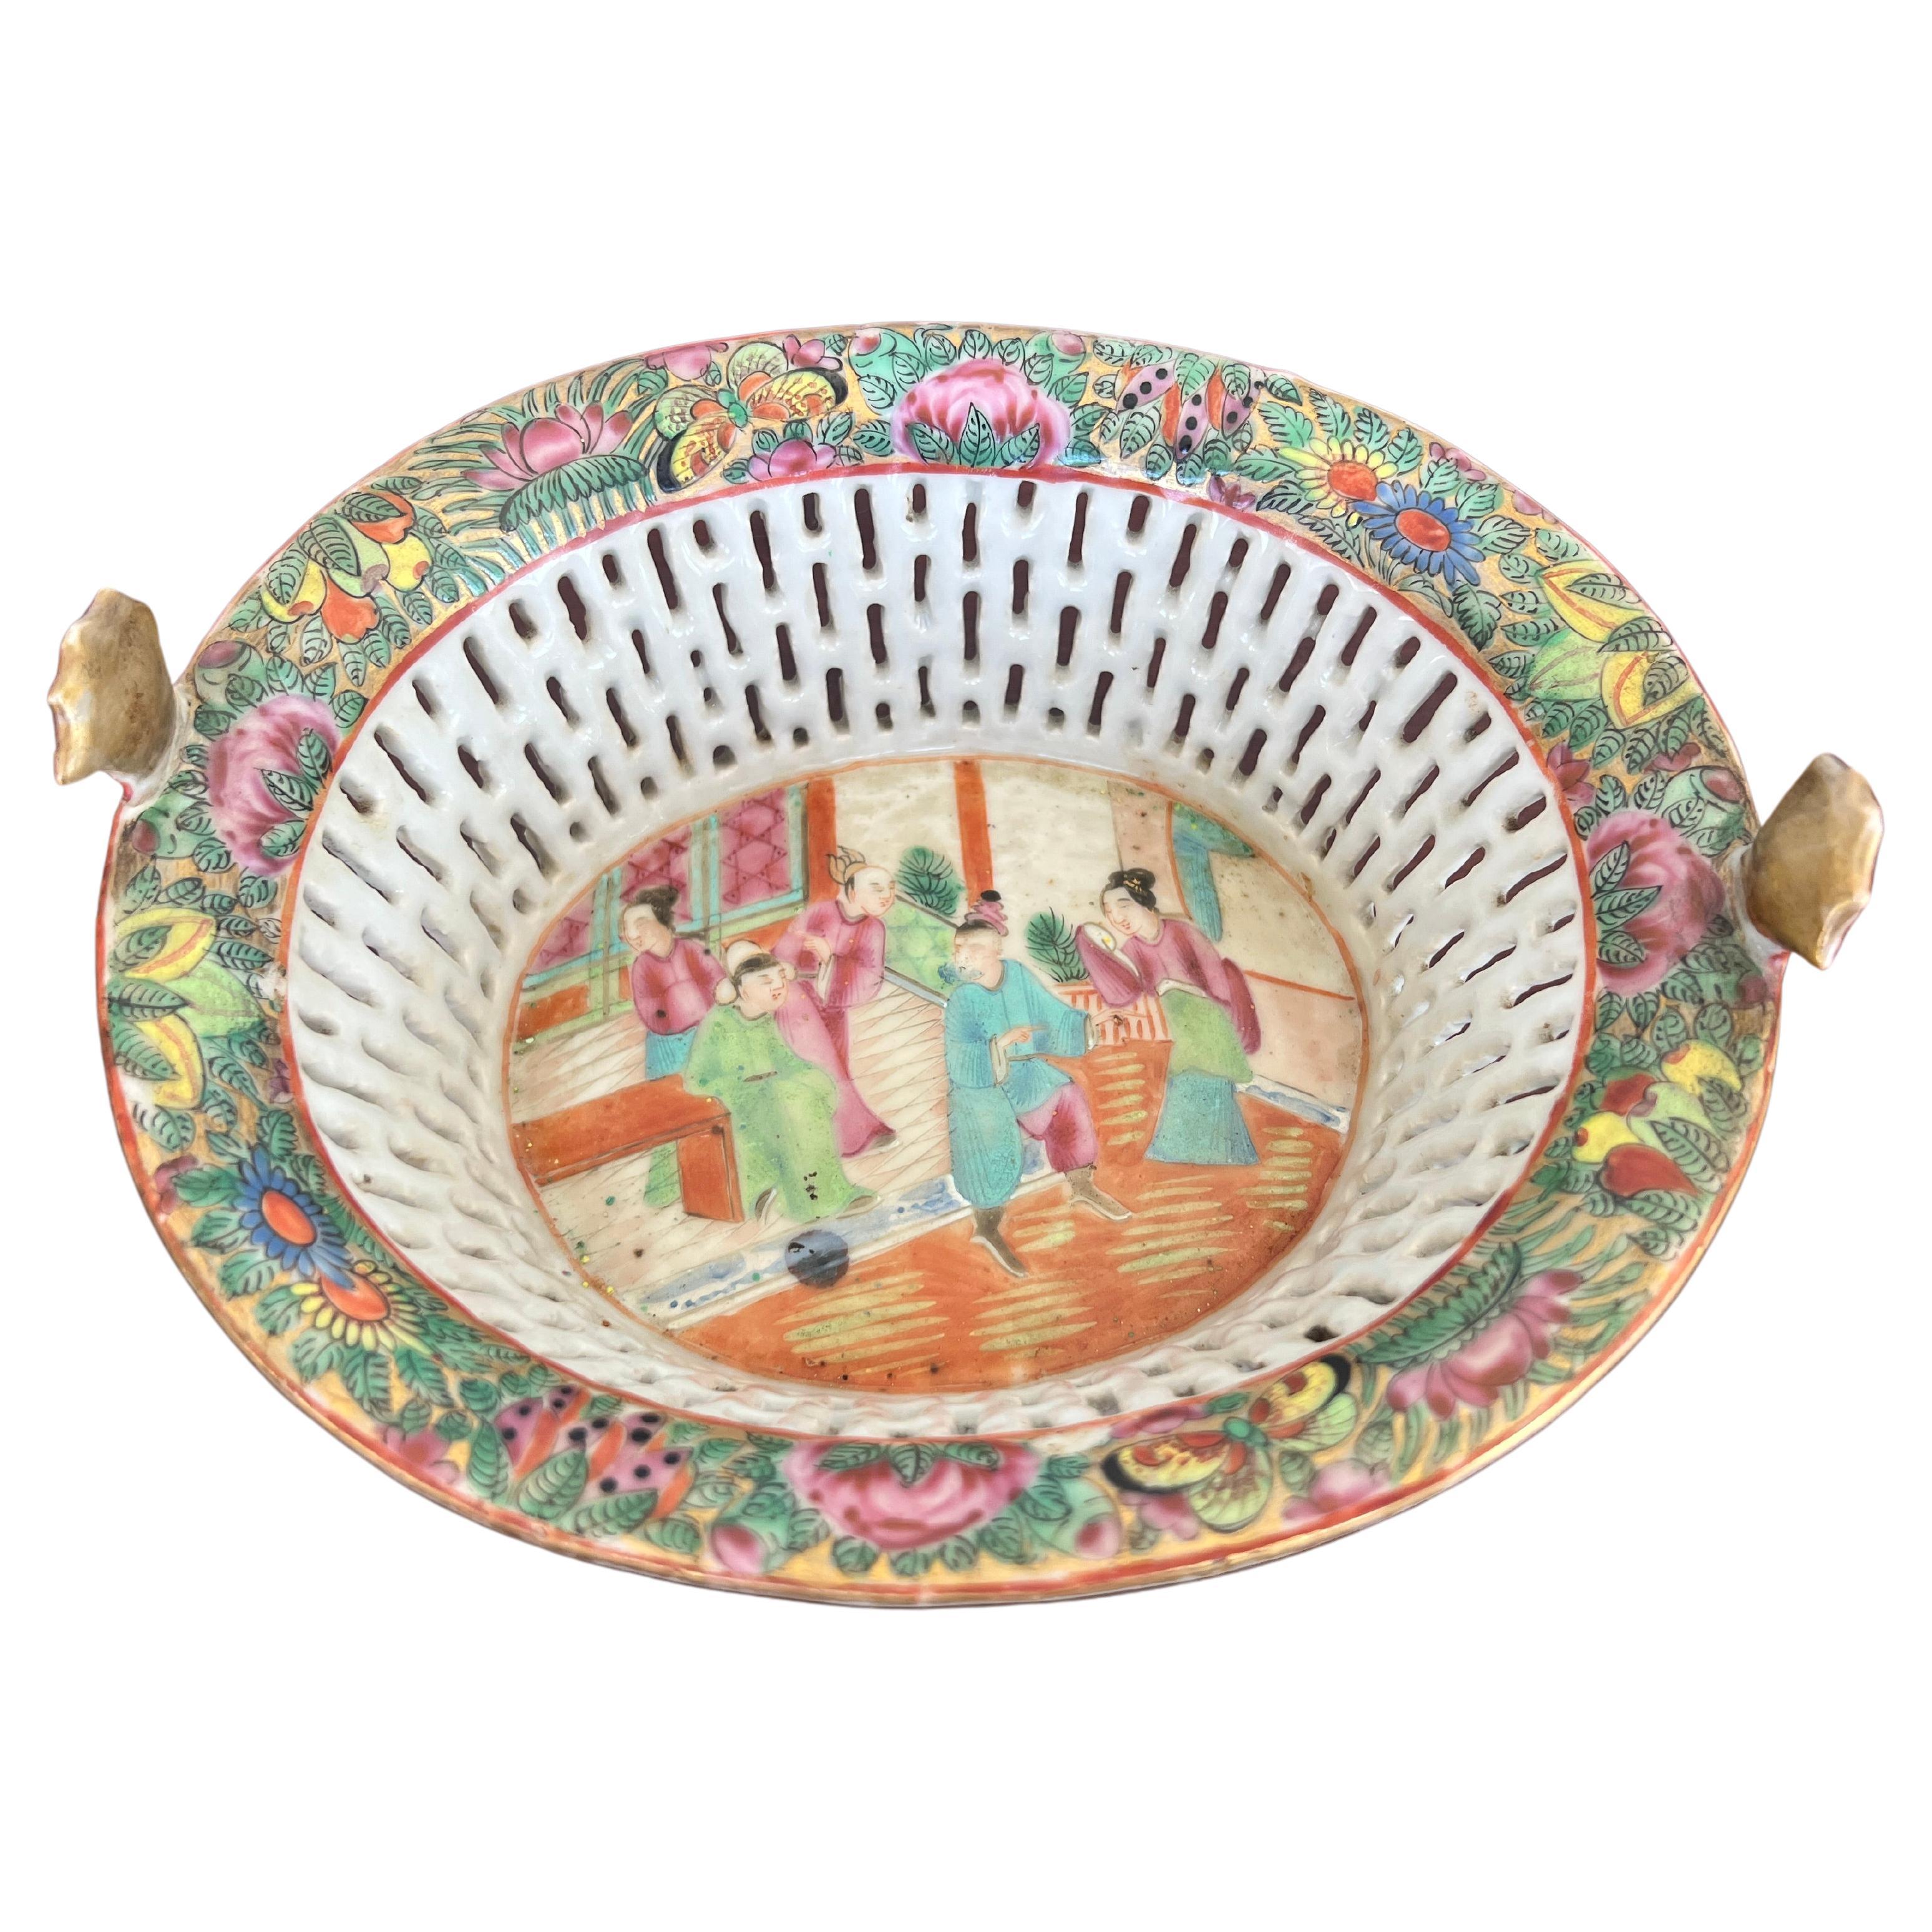 19th Century, Chinese Export Porcelain Famille Rose Medallion Chestnut Basket